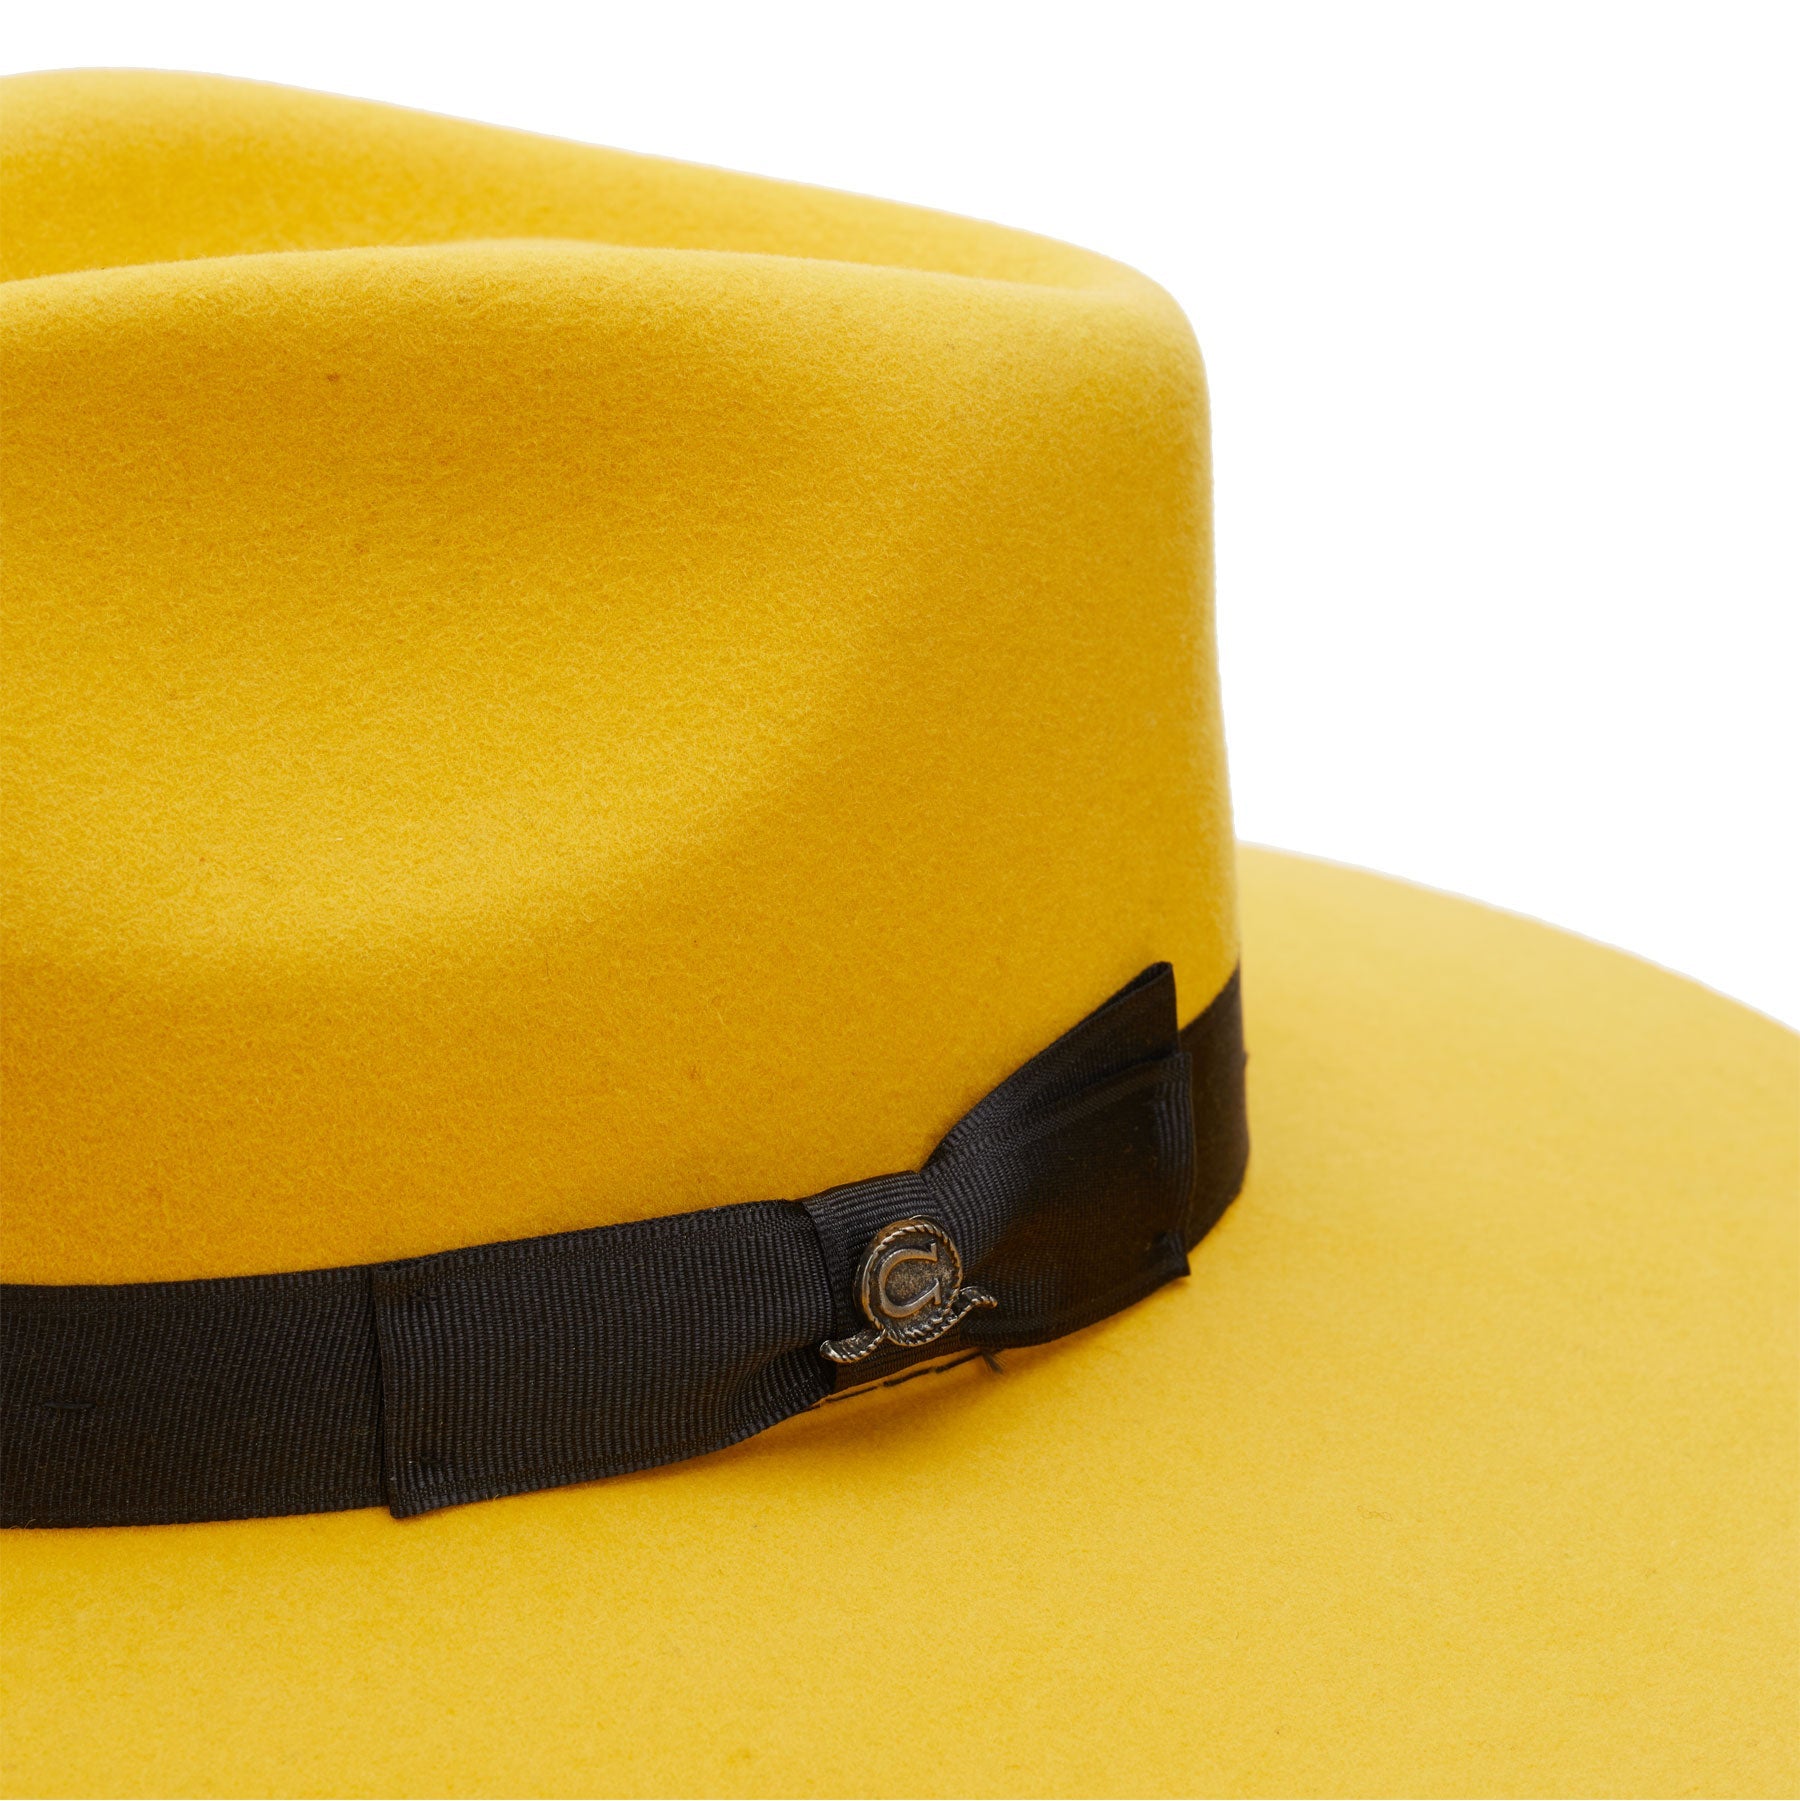 Yellow Charlie 1 Horse Highway Felt Hat